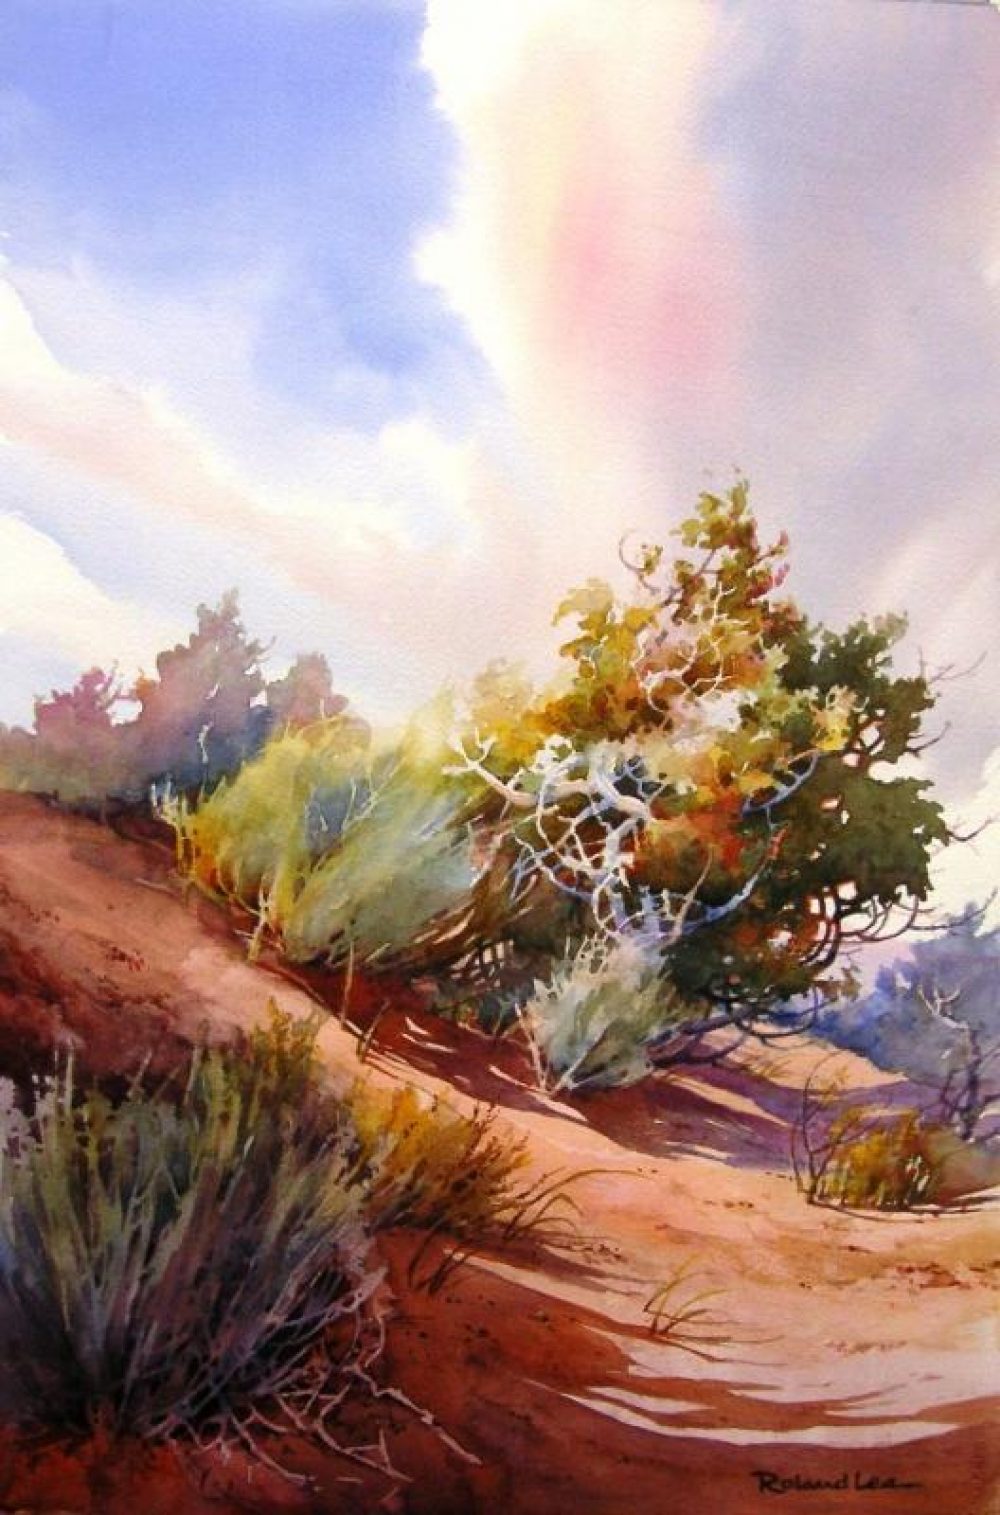 Desert Dance - Original Watercolor Landscape Painting of the Southwest Desert